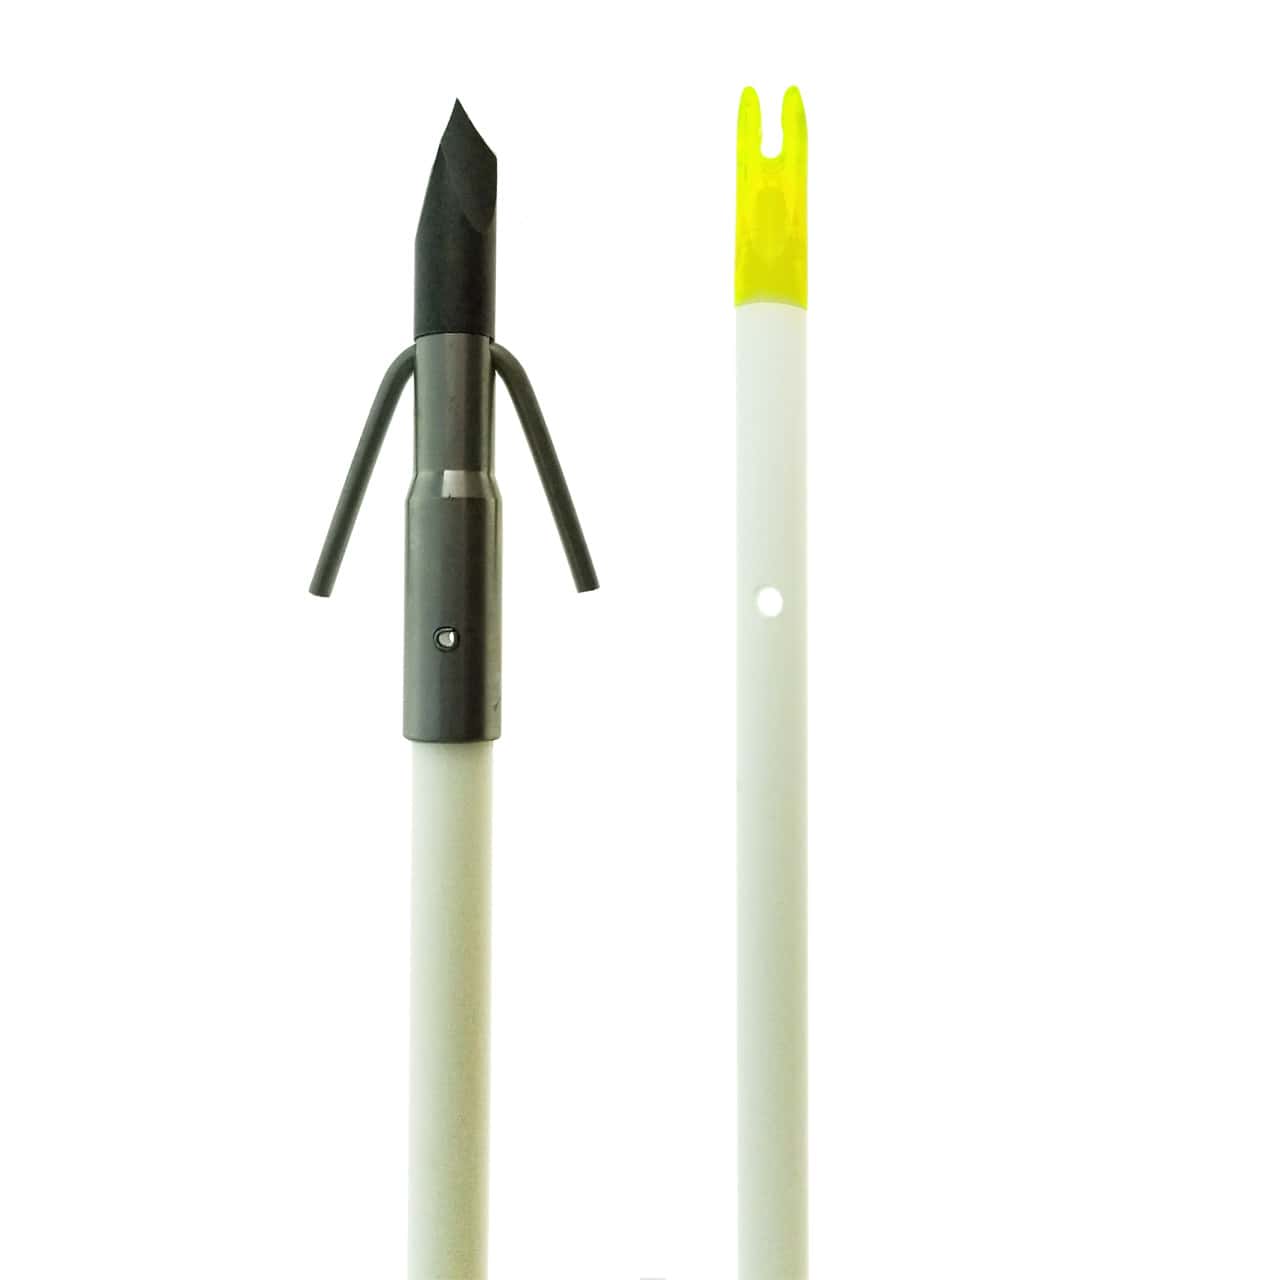 Muzzy Iron 3 Blade Fish Point W- Chartreuse Arrow